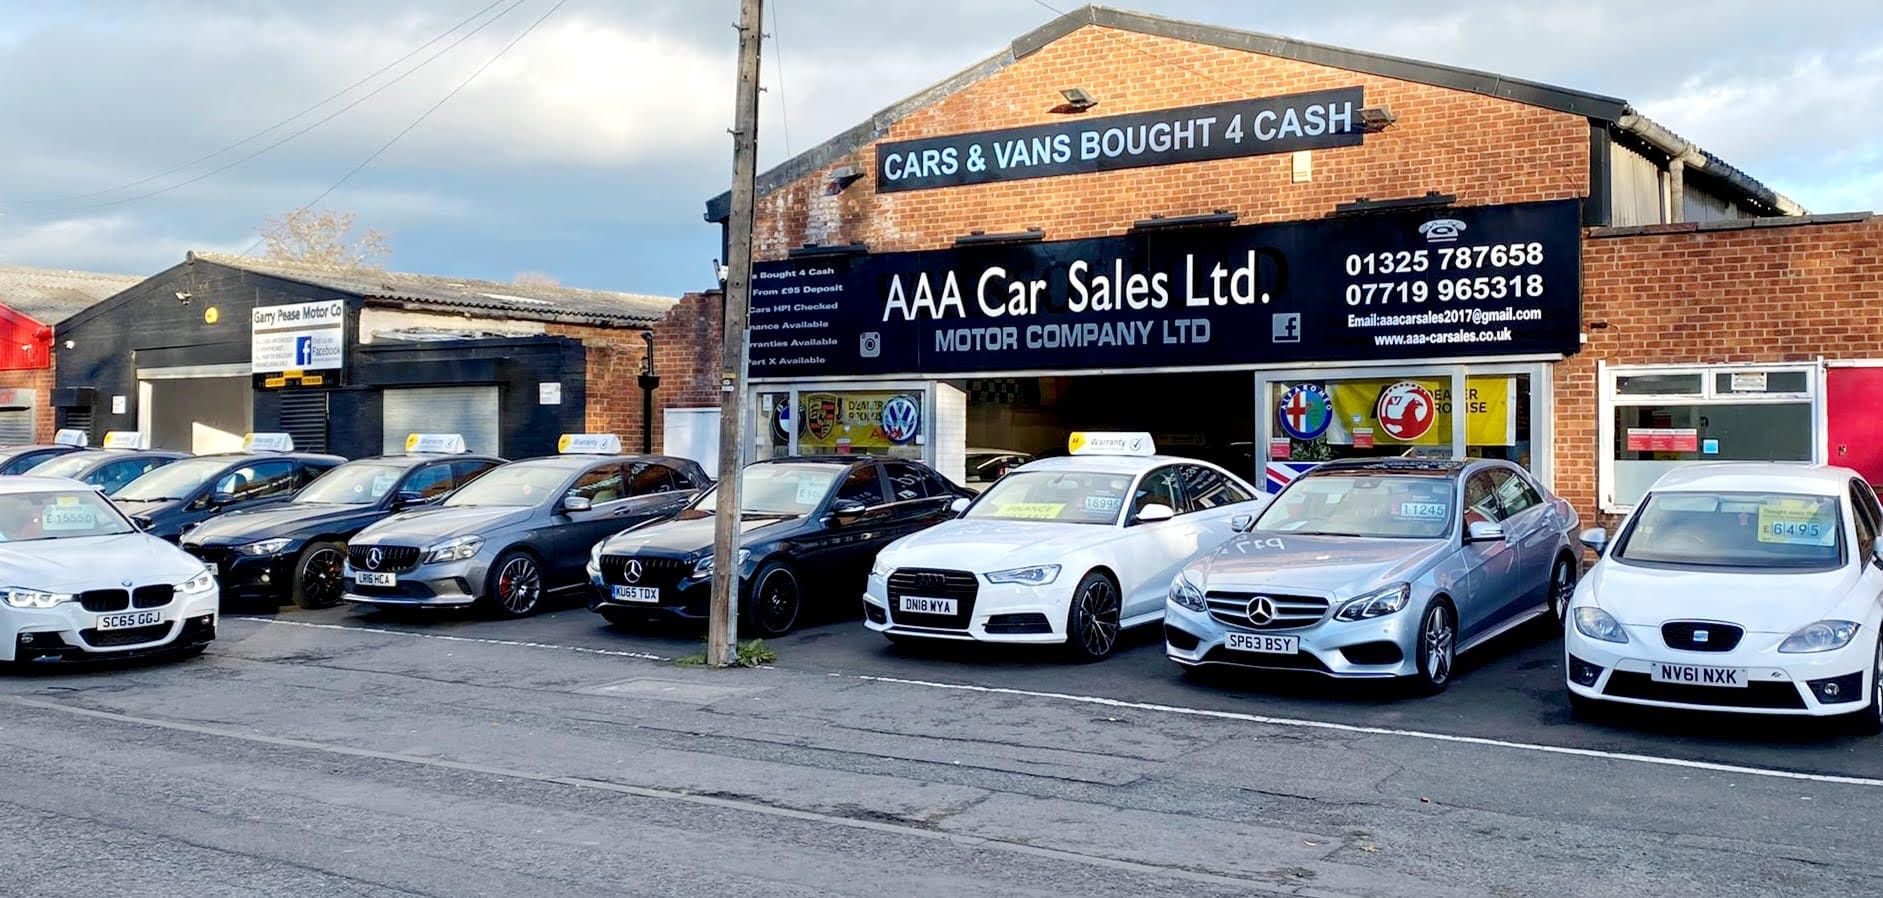 AAA Car Sale Ltd | Car dealership in Darlington | AutoTrader